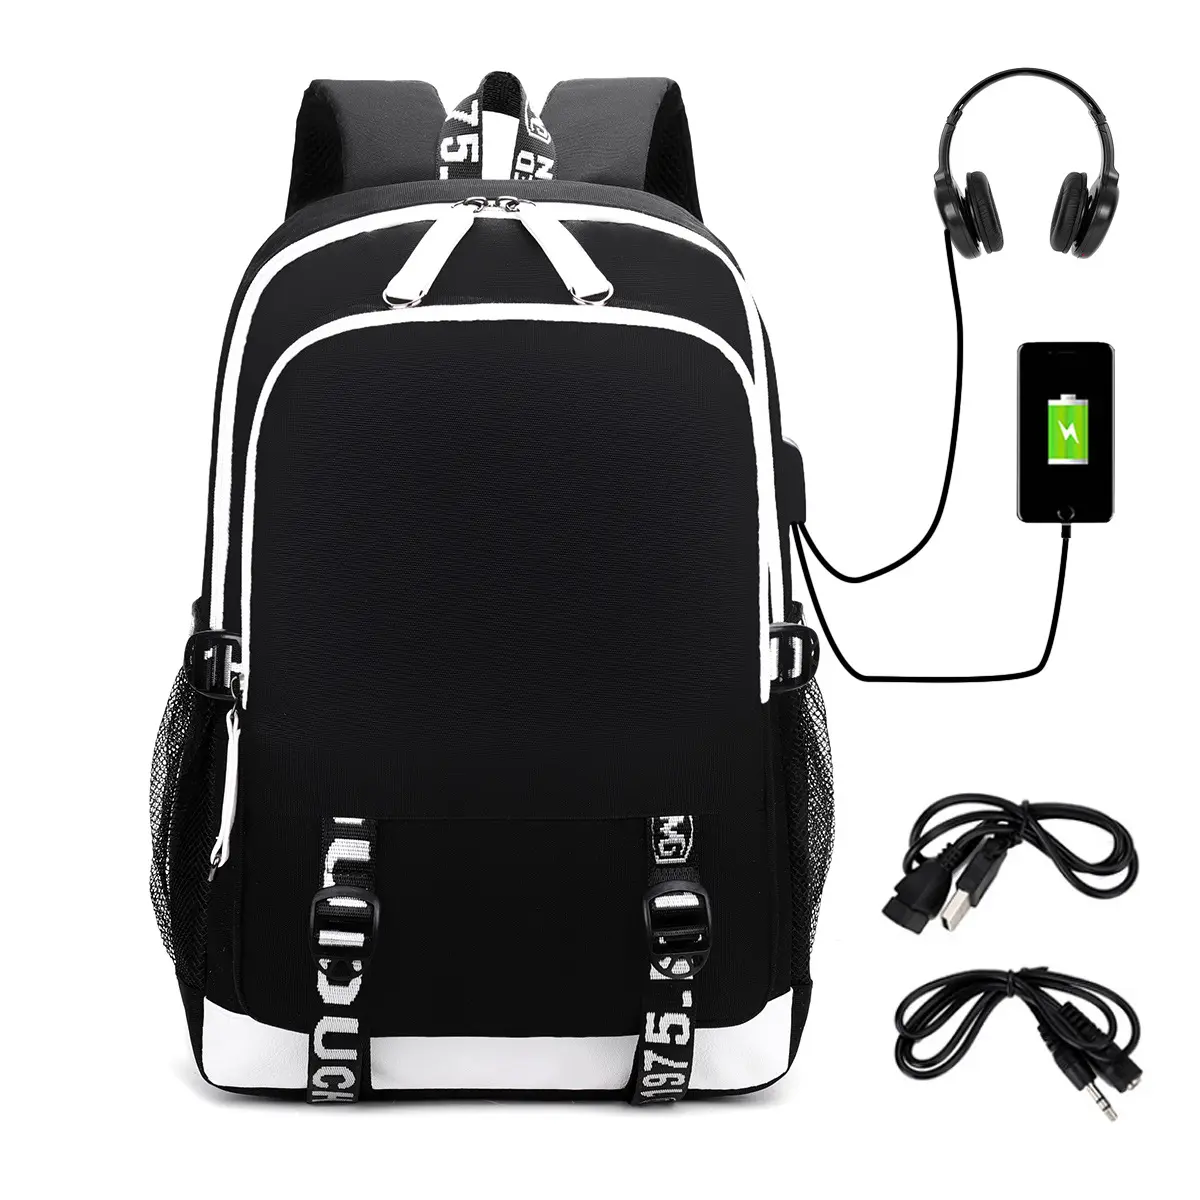 Customize USB Charging Fashionable School Shoulder Bag Teenager Children School Backpack For Boys And Girls